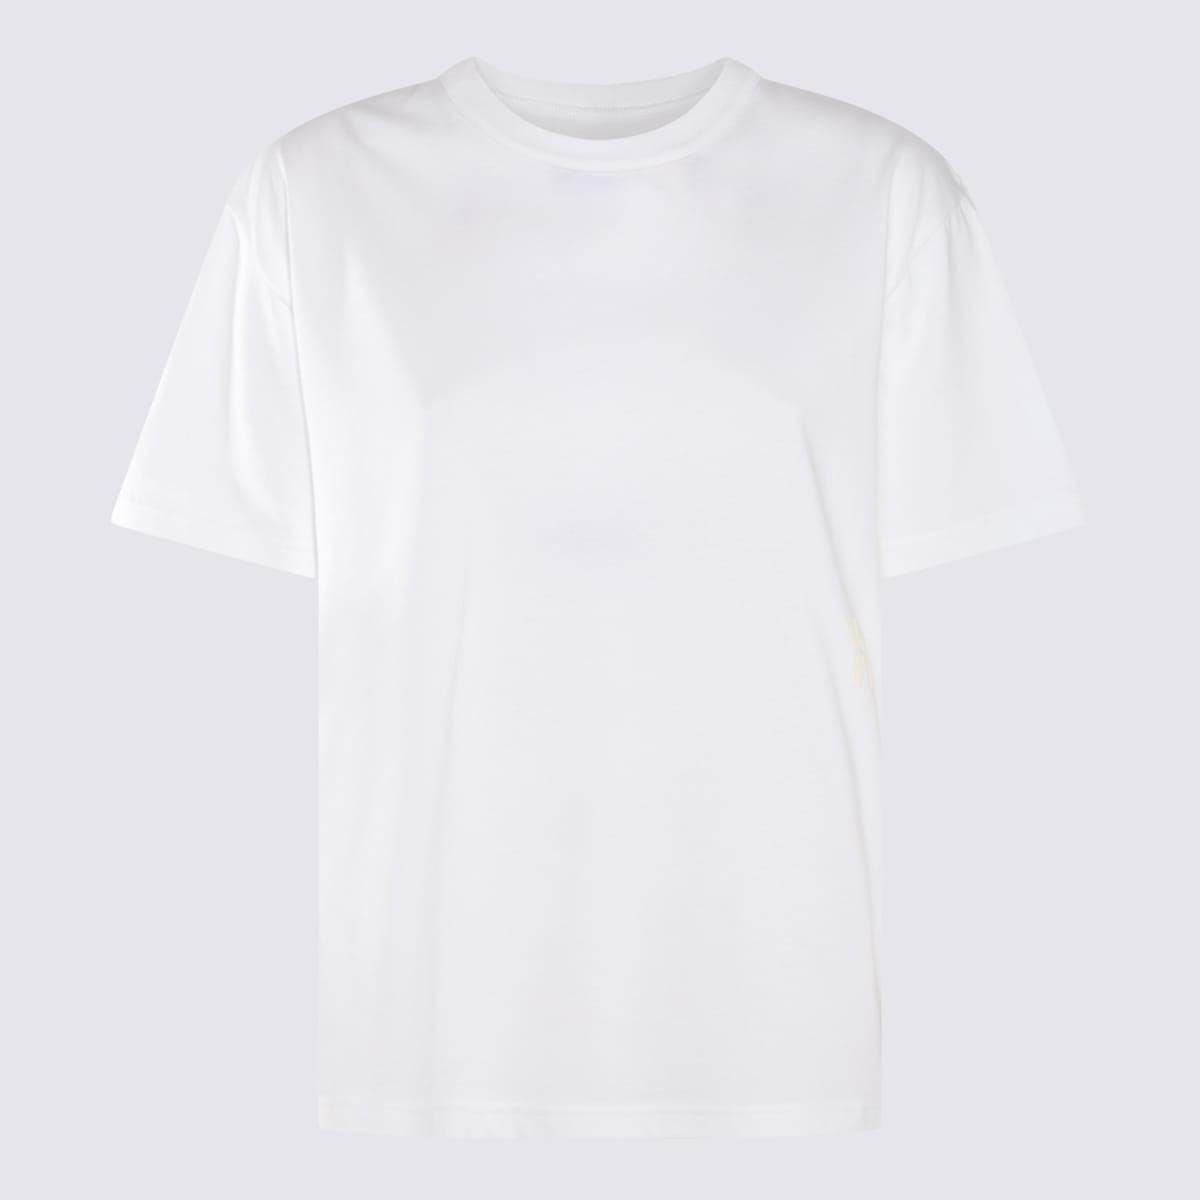 Alexander Wang White Cotton T-shirt